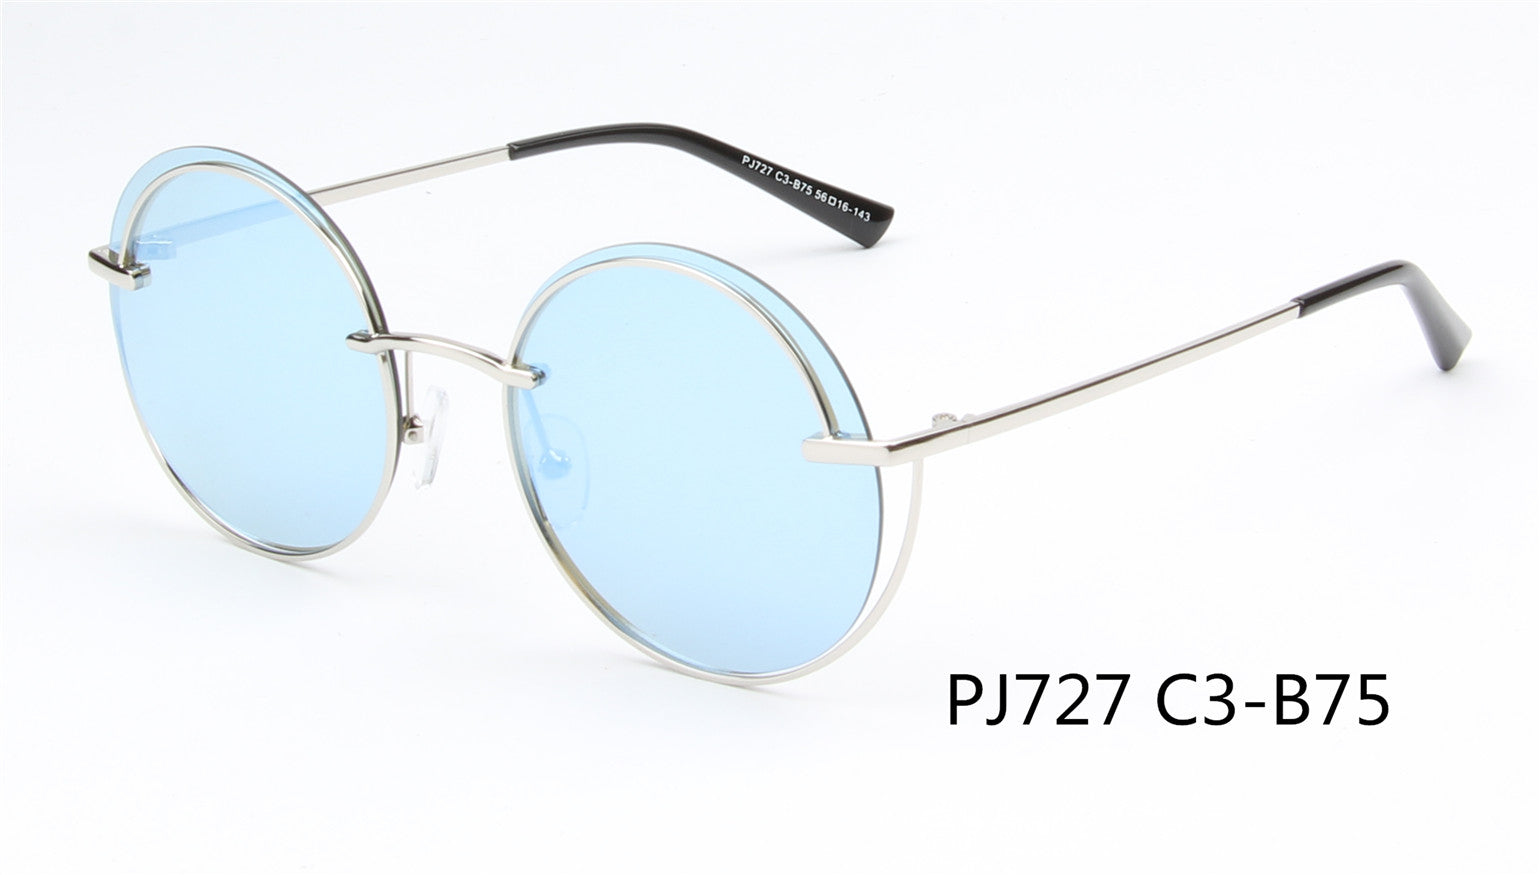 SHIV-PJ727 - Women Round Polarized Fashion Sunglasses Silver/Blue MIRROR